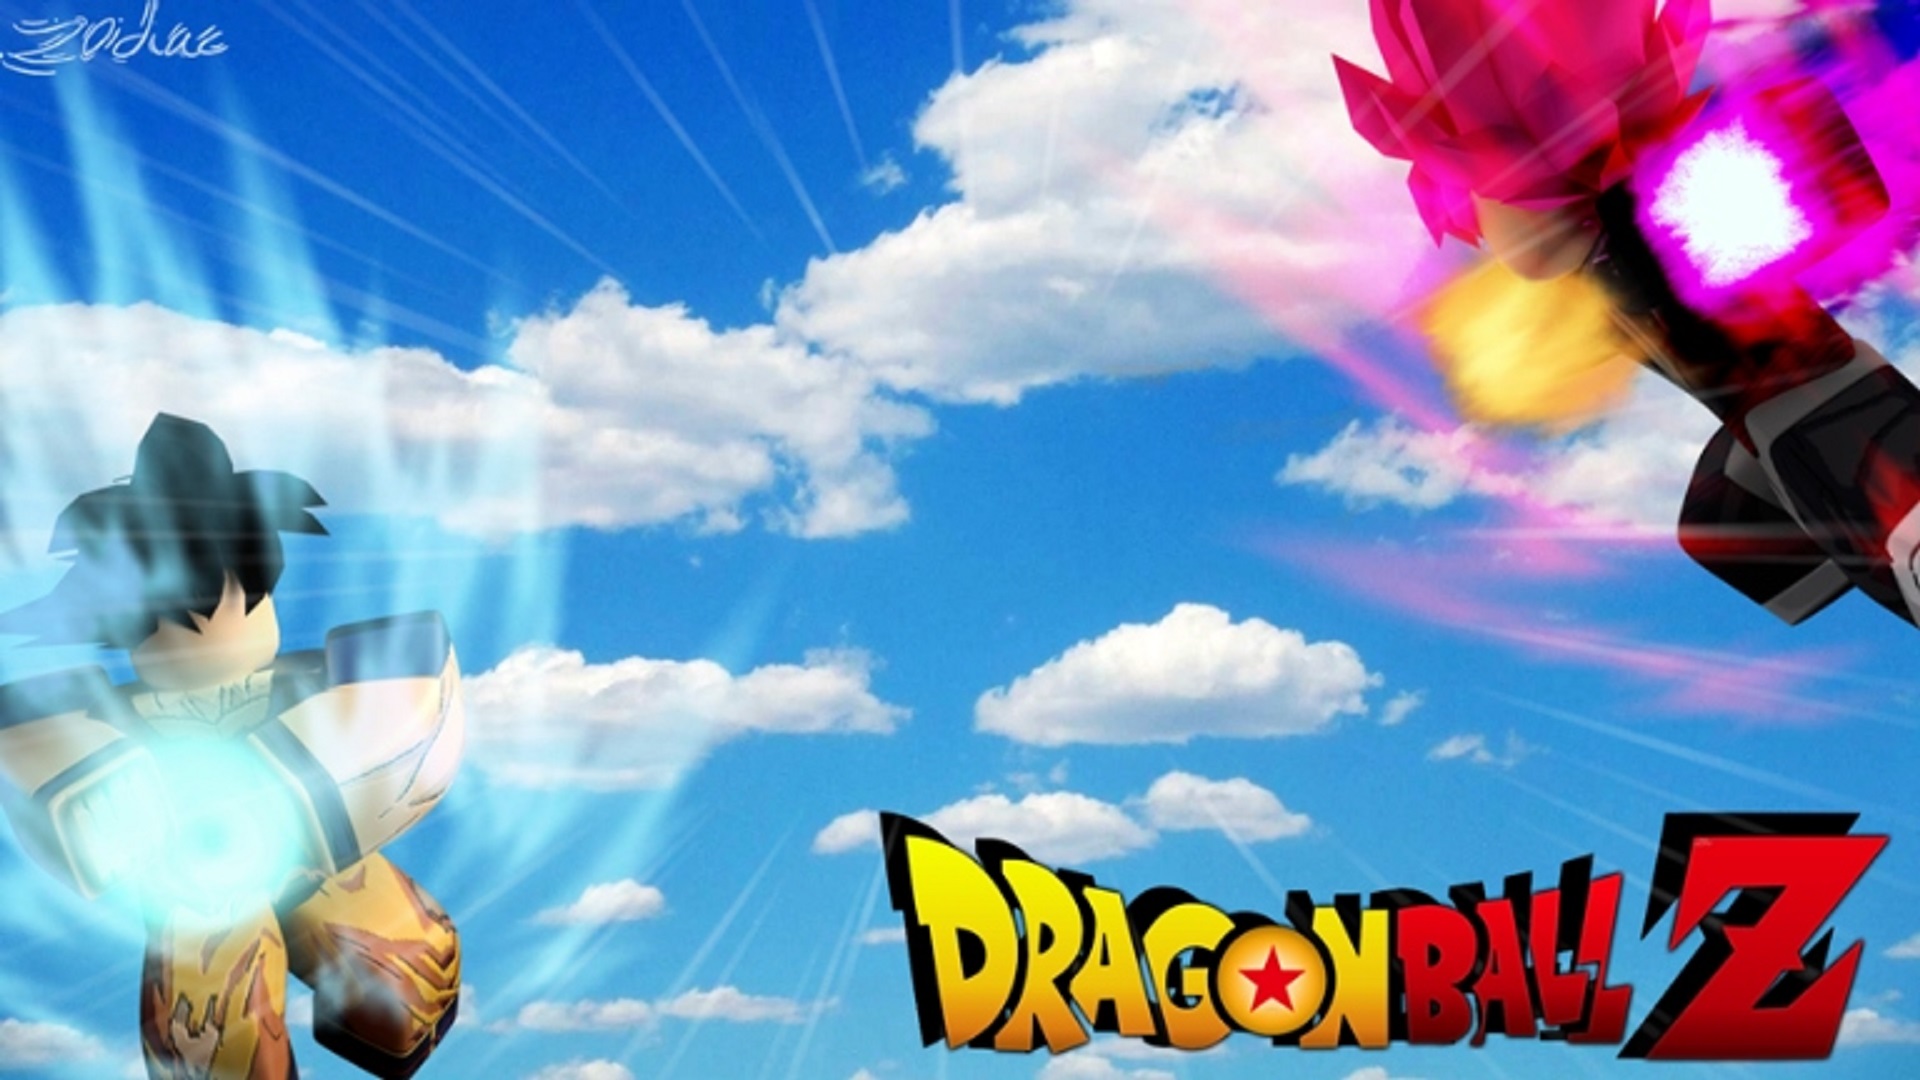 Dragon Ball Rage Codes 2019 07 2021 - roblox dragon ball online hack